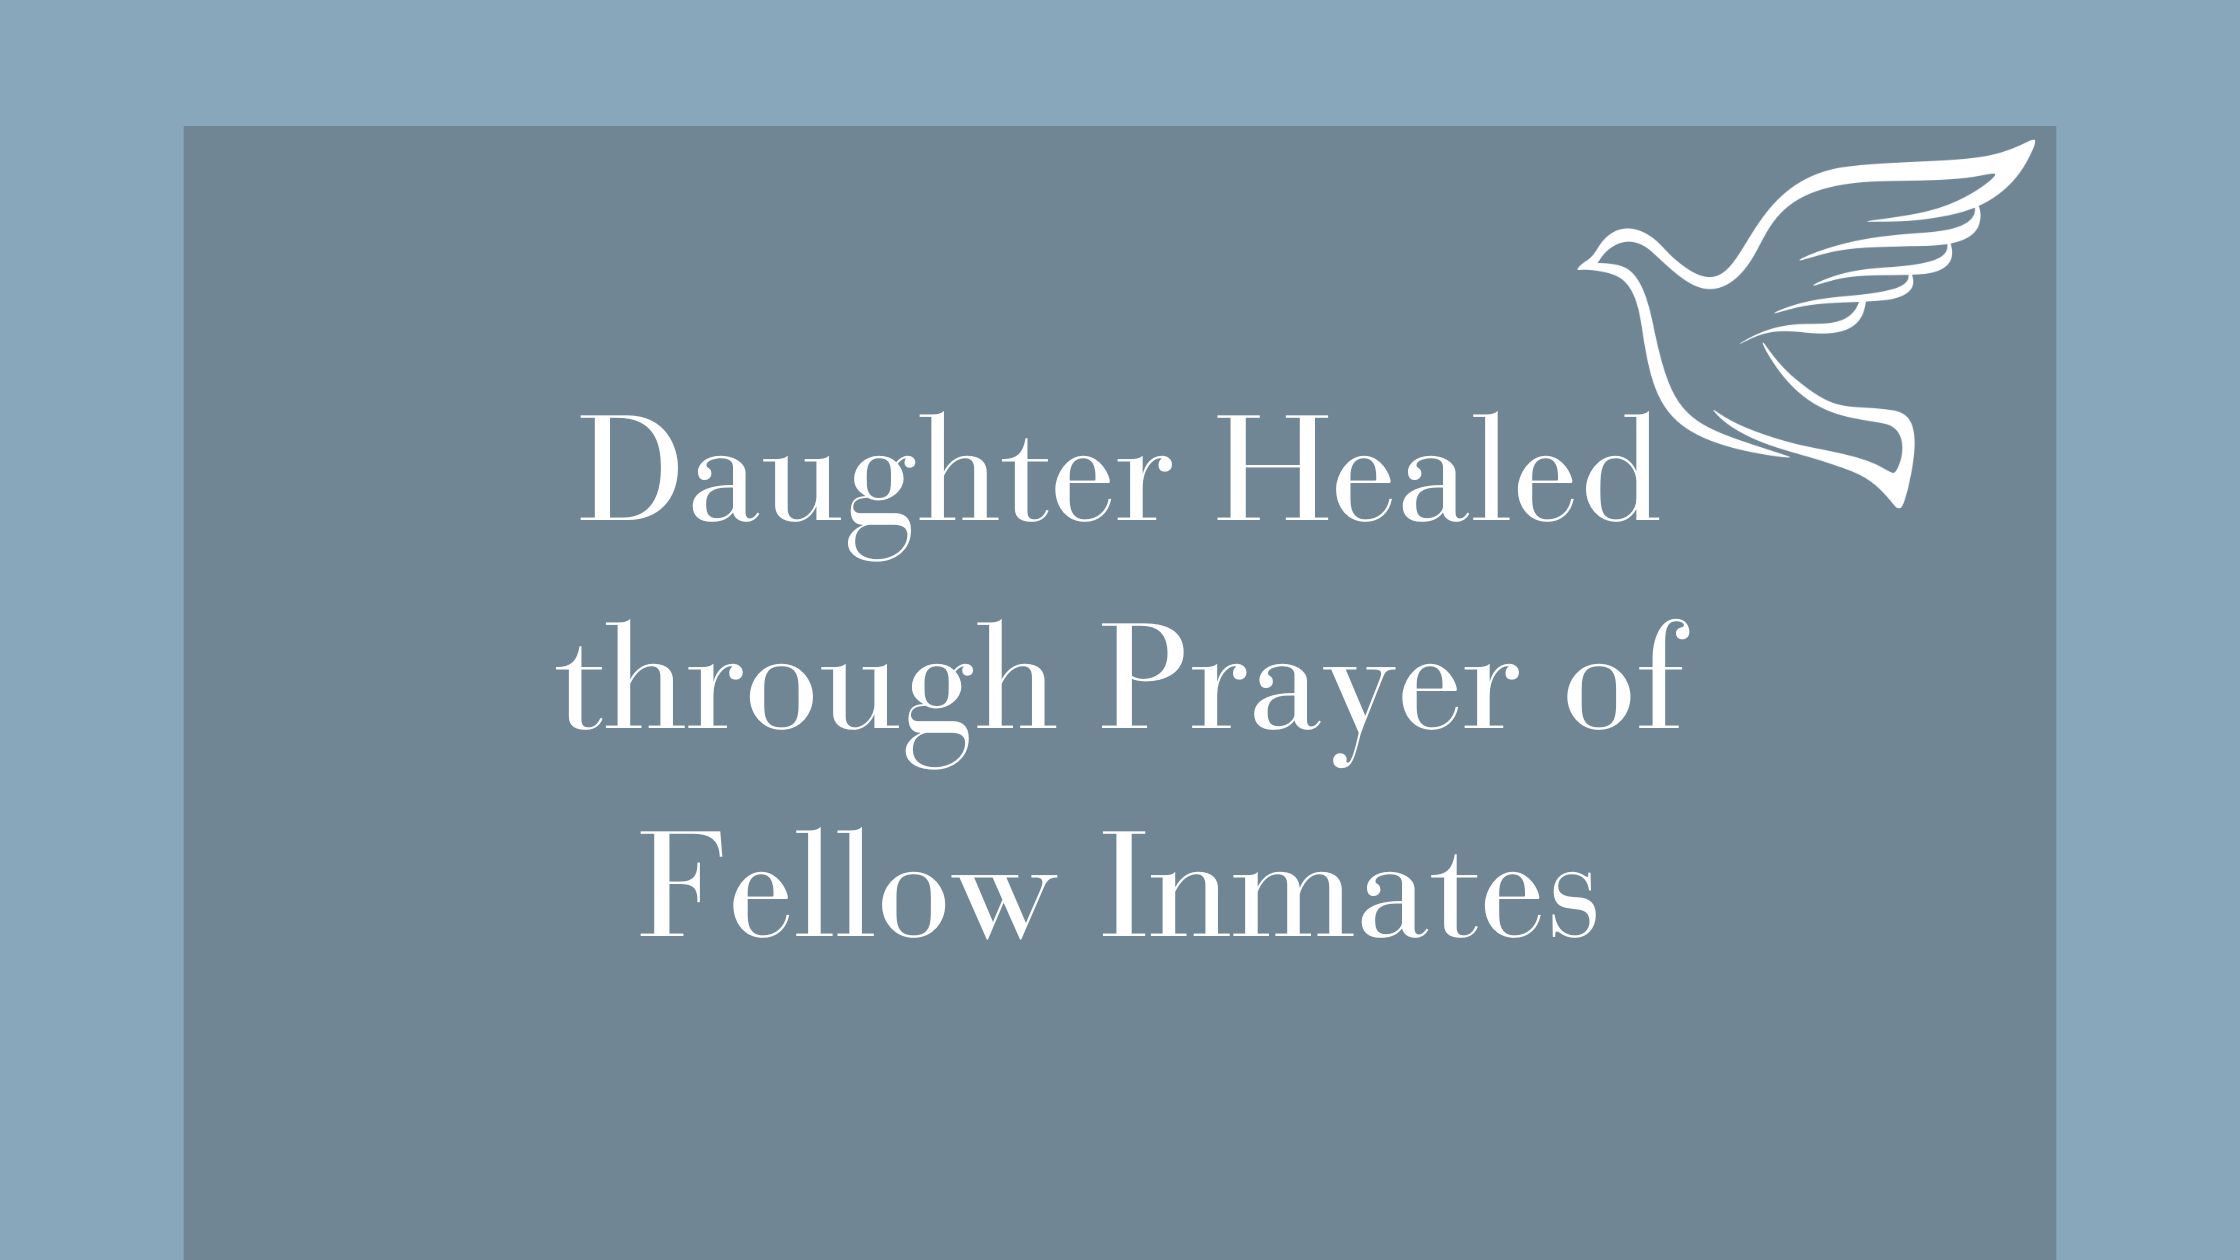 Daughter Healed through prayer of Fellow Inmates (1)